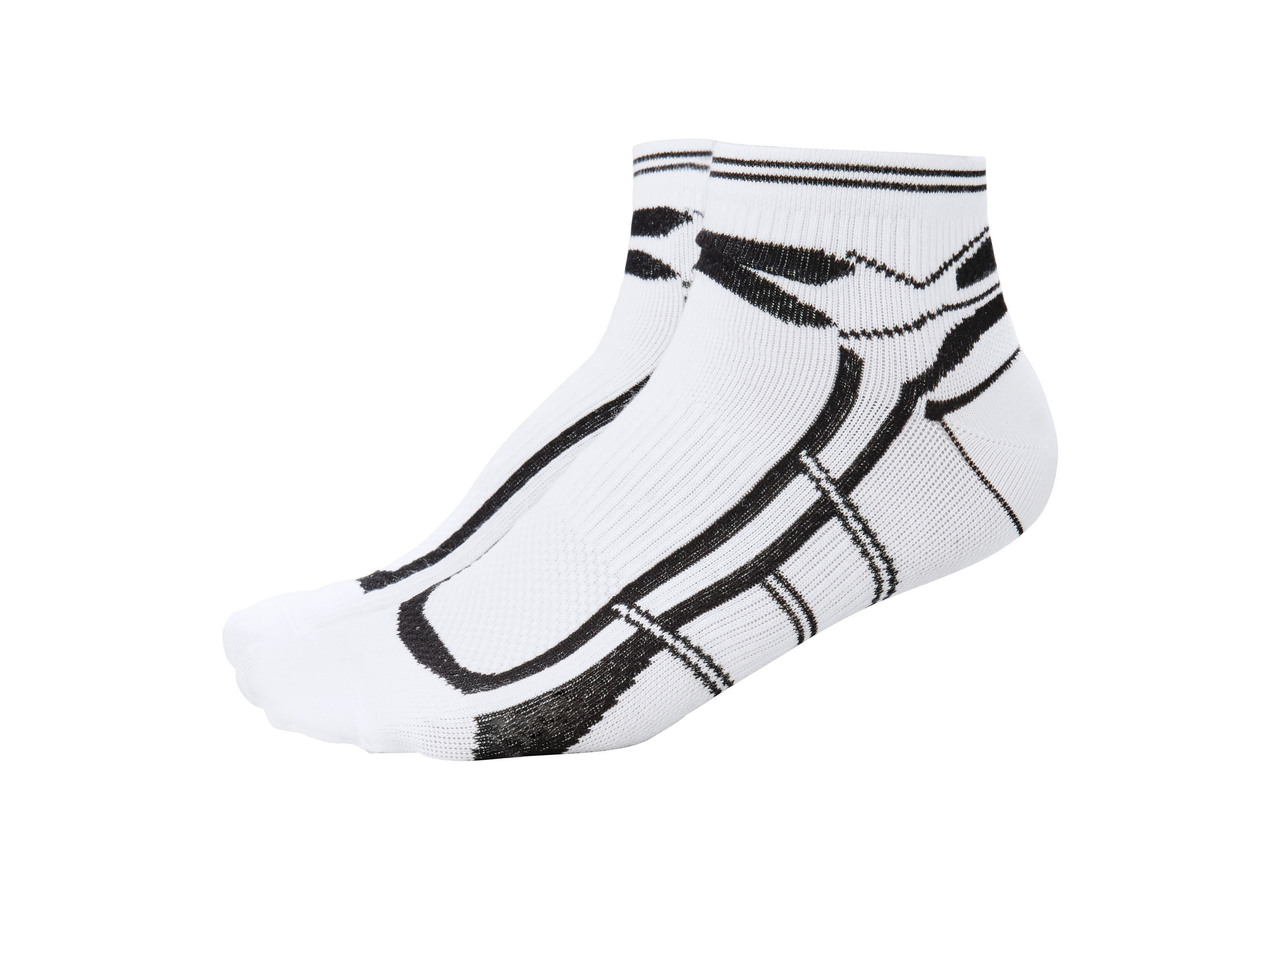 Men's Sports Socks, 2 pairs